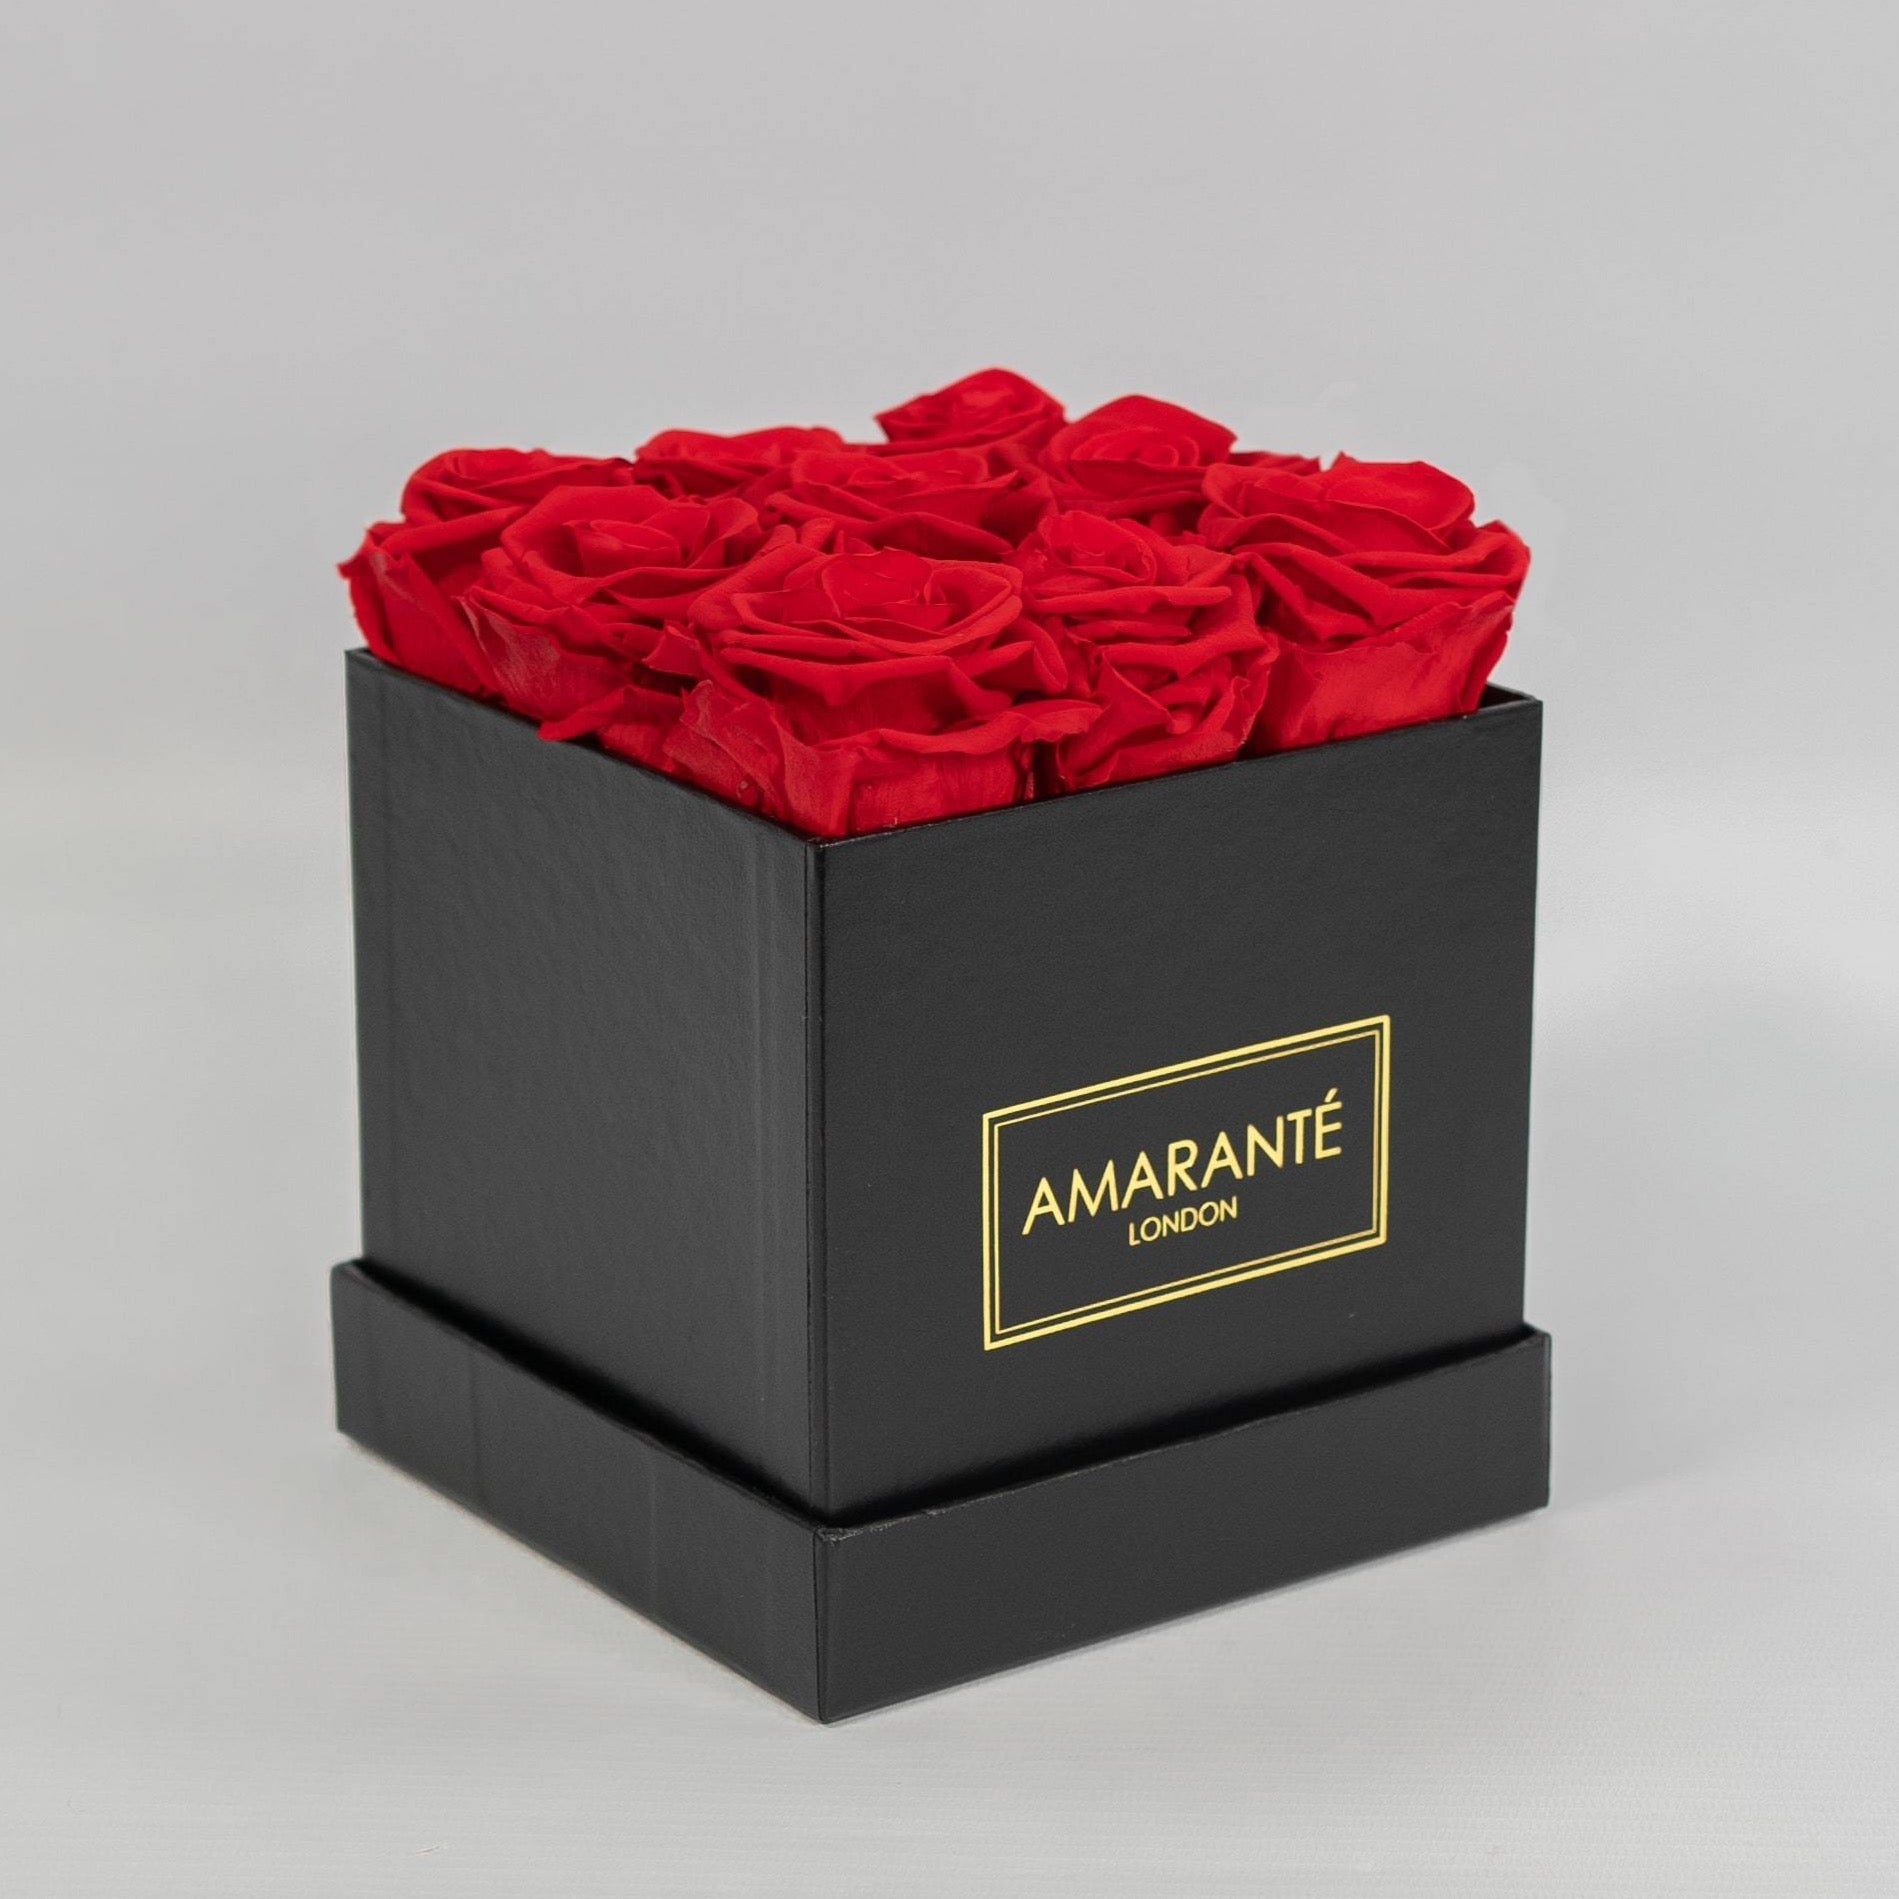 Stunning red Roses featured in a dapper black medium box